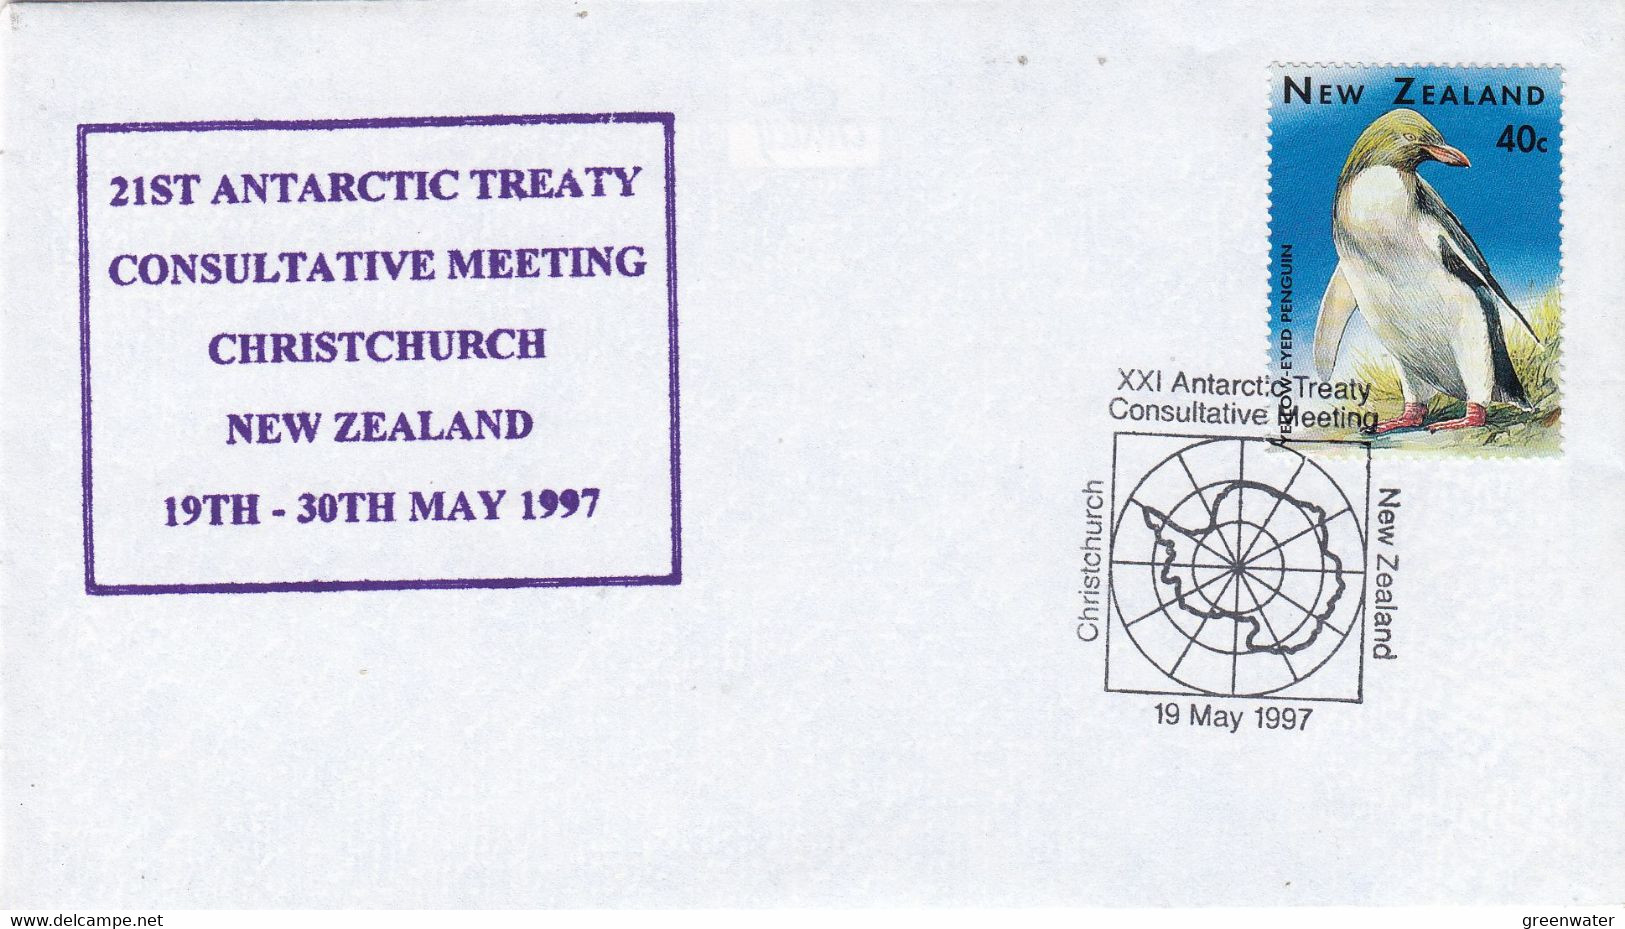 New Zealand 1997 Cover 21st Antarctic Treaty Consultative Meeting Christchurch Special Ca 19 May 1997 (GPA131B) - Antarktisvertrag